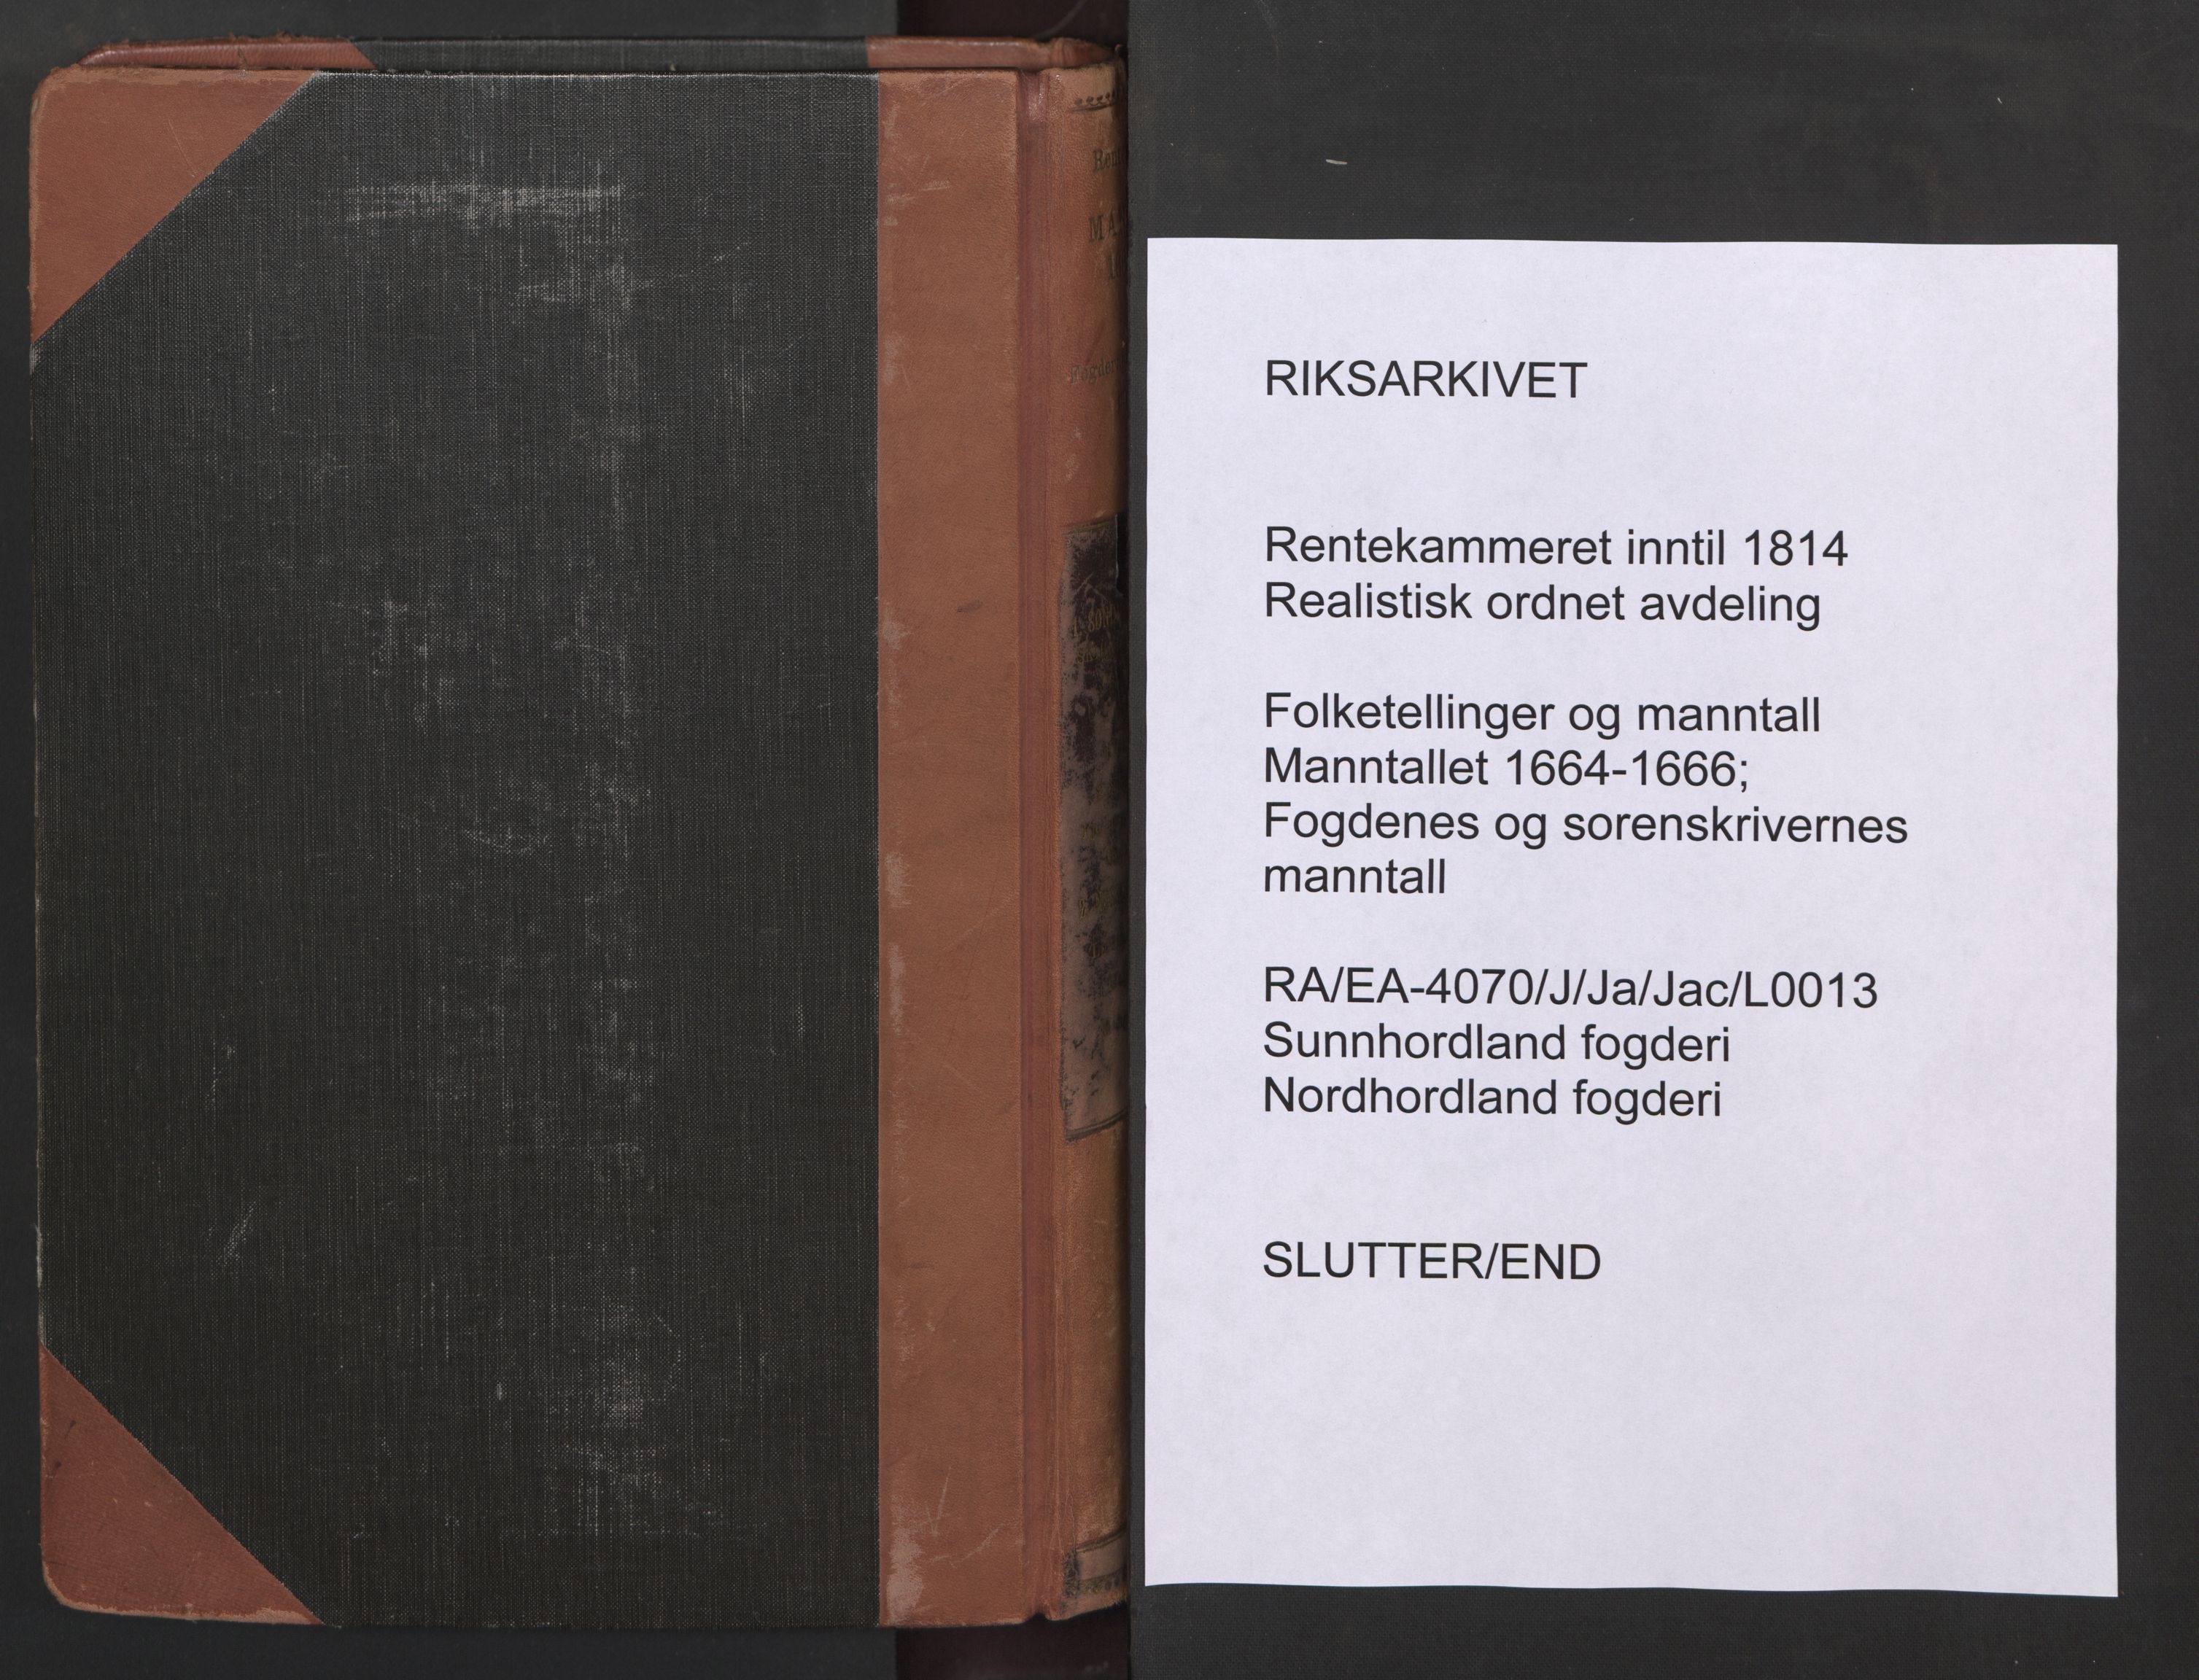 RA, Fogdenes og sorenskrivernes manntall 1664-1666, nr. 13: Nordhordland fogderi og Sunnhordland fogderi, 1665